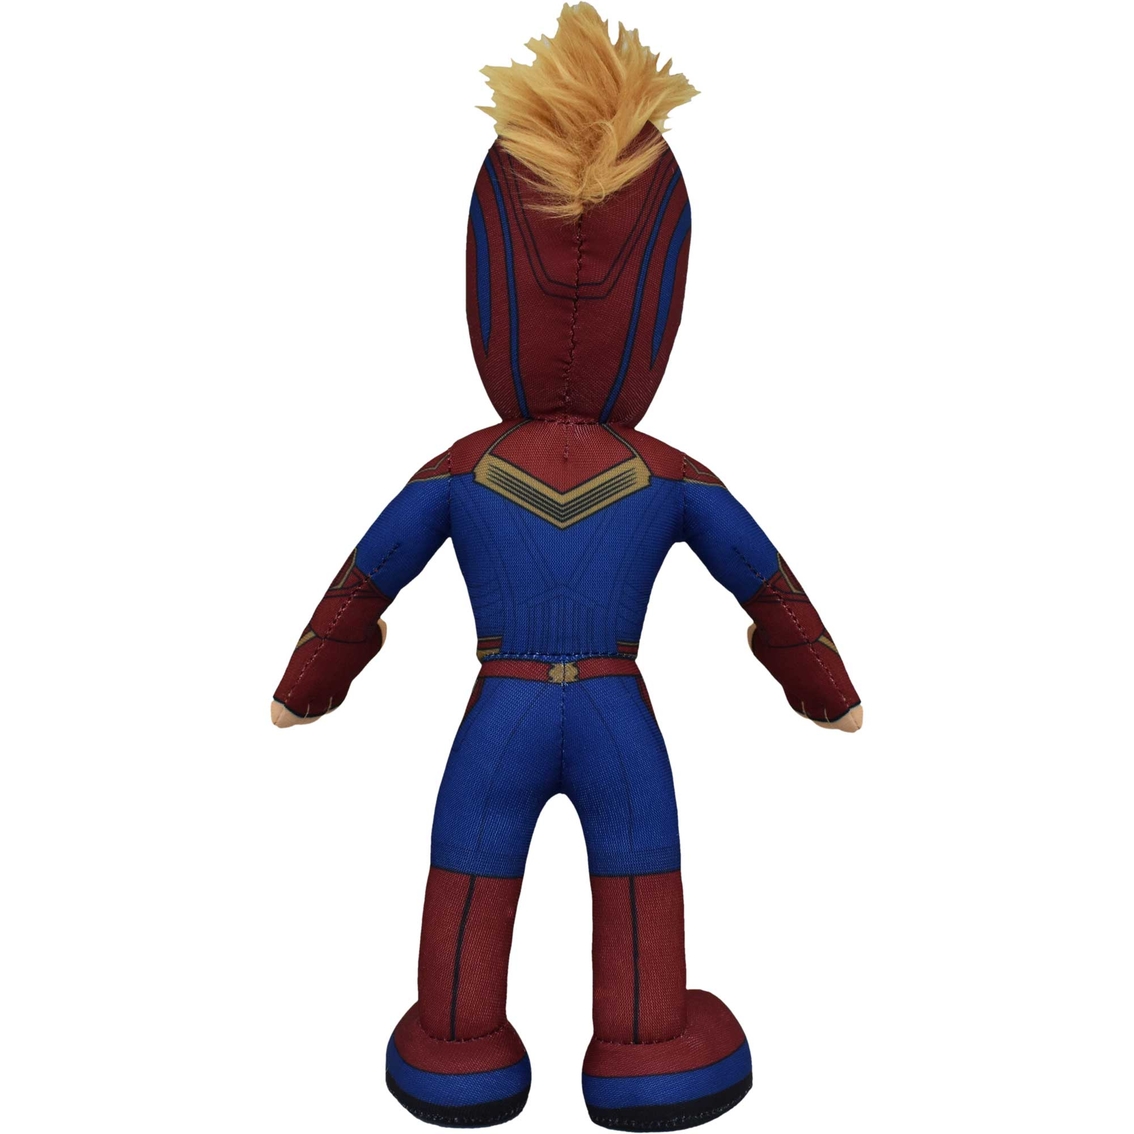 Bleacher Creatures Captain Marvel 10 in. Plush Figure - Image 2 of 3